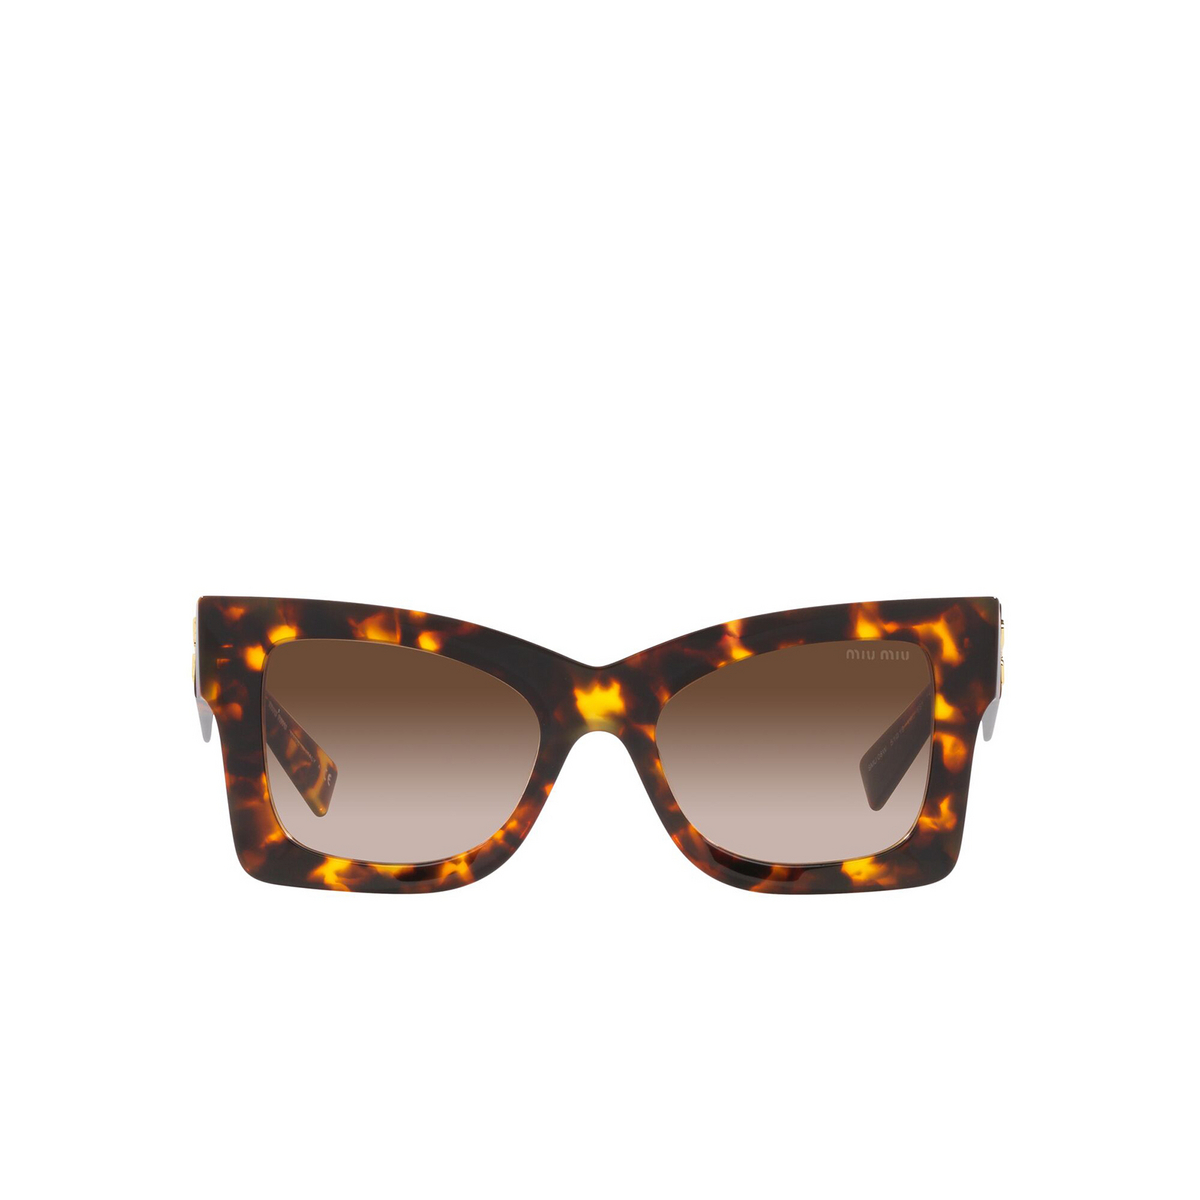 Miu Miu® Butterfly Sunglasses: MU 08WS color Honey Havana VAU6S1 - front view.